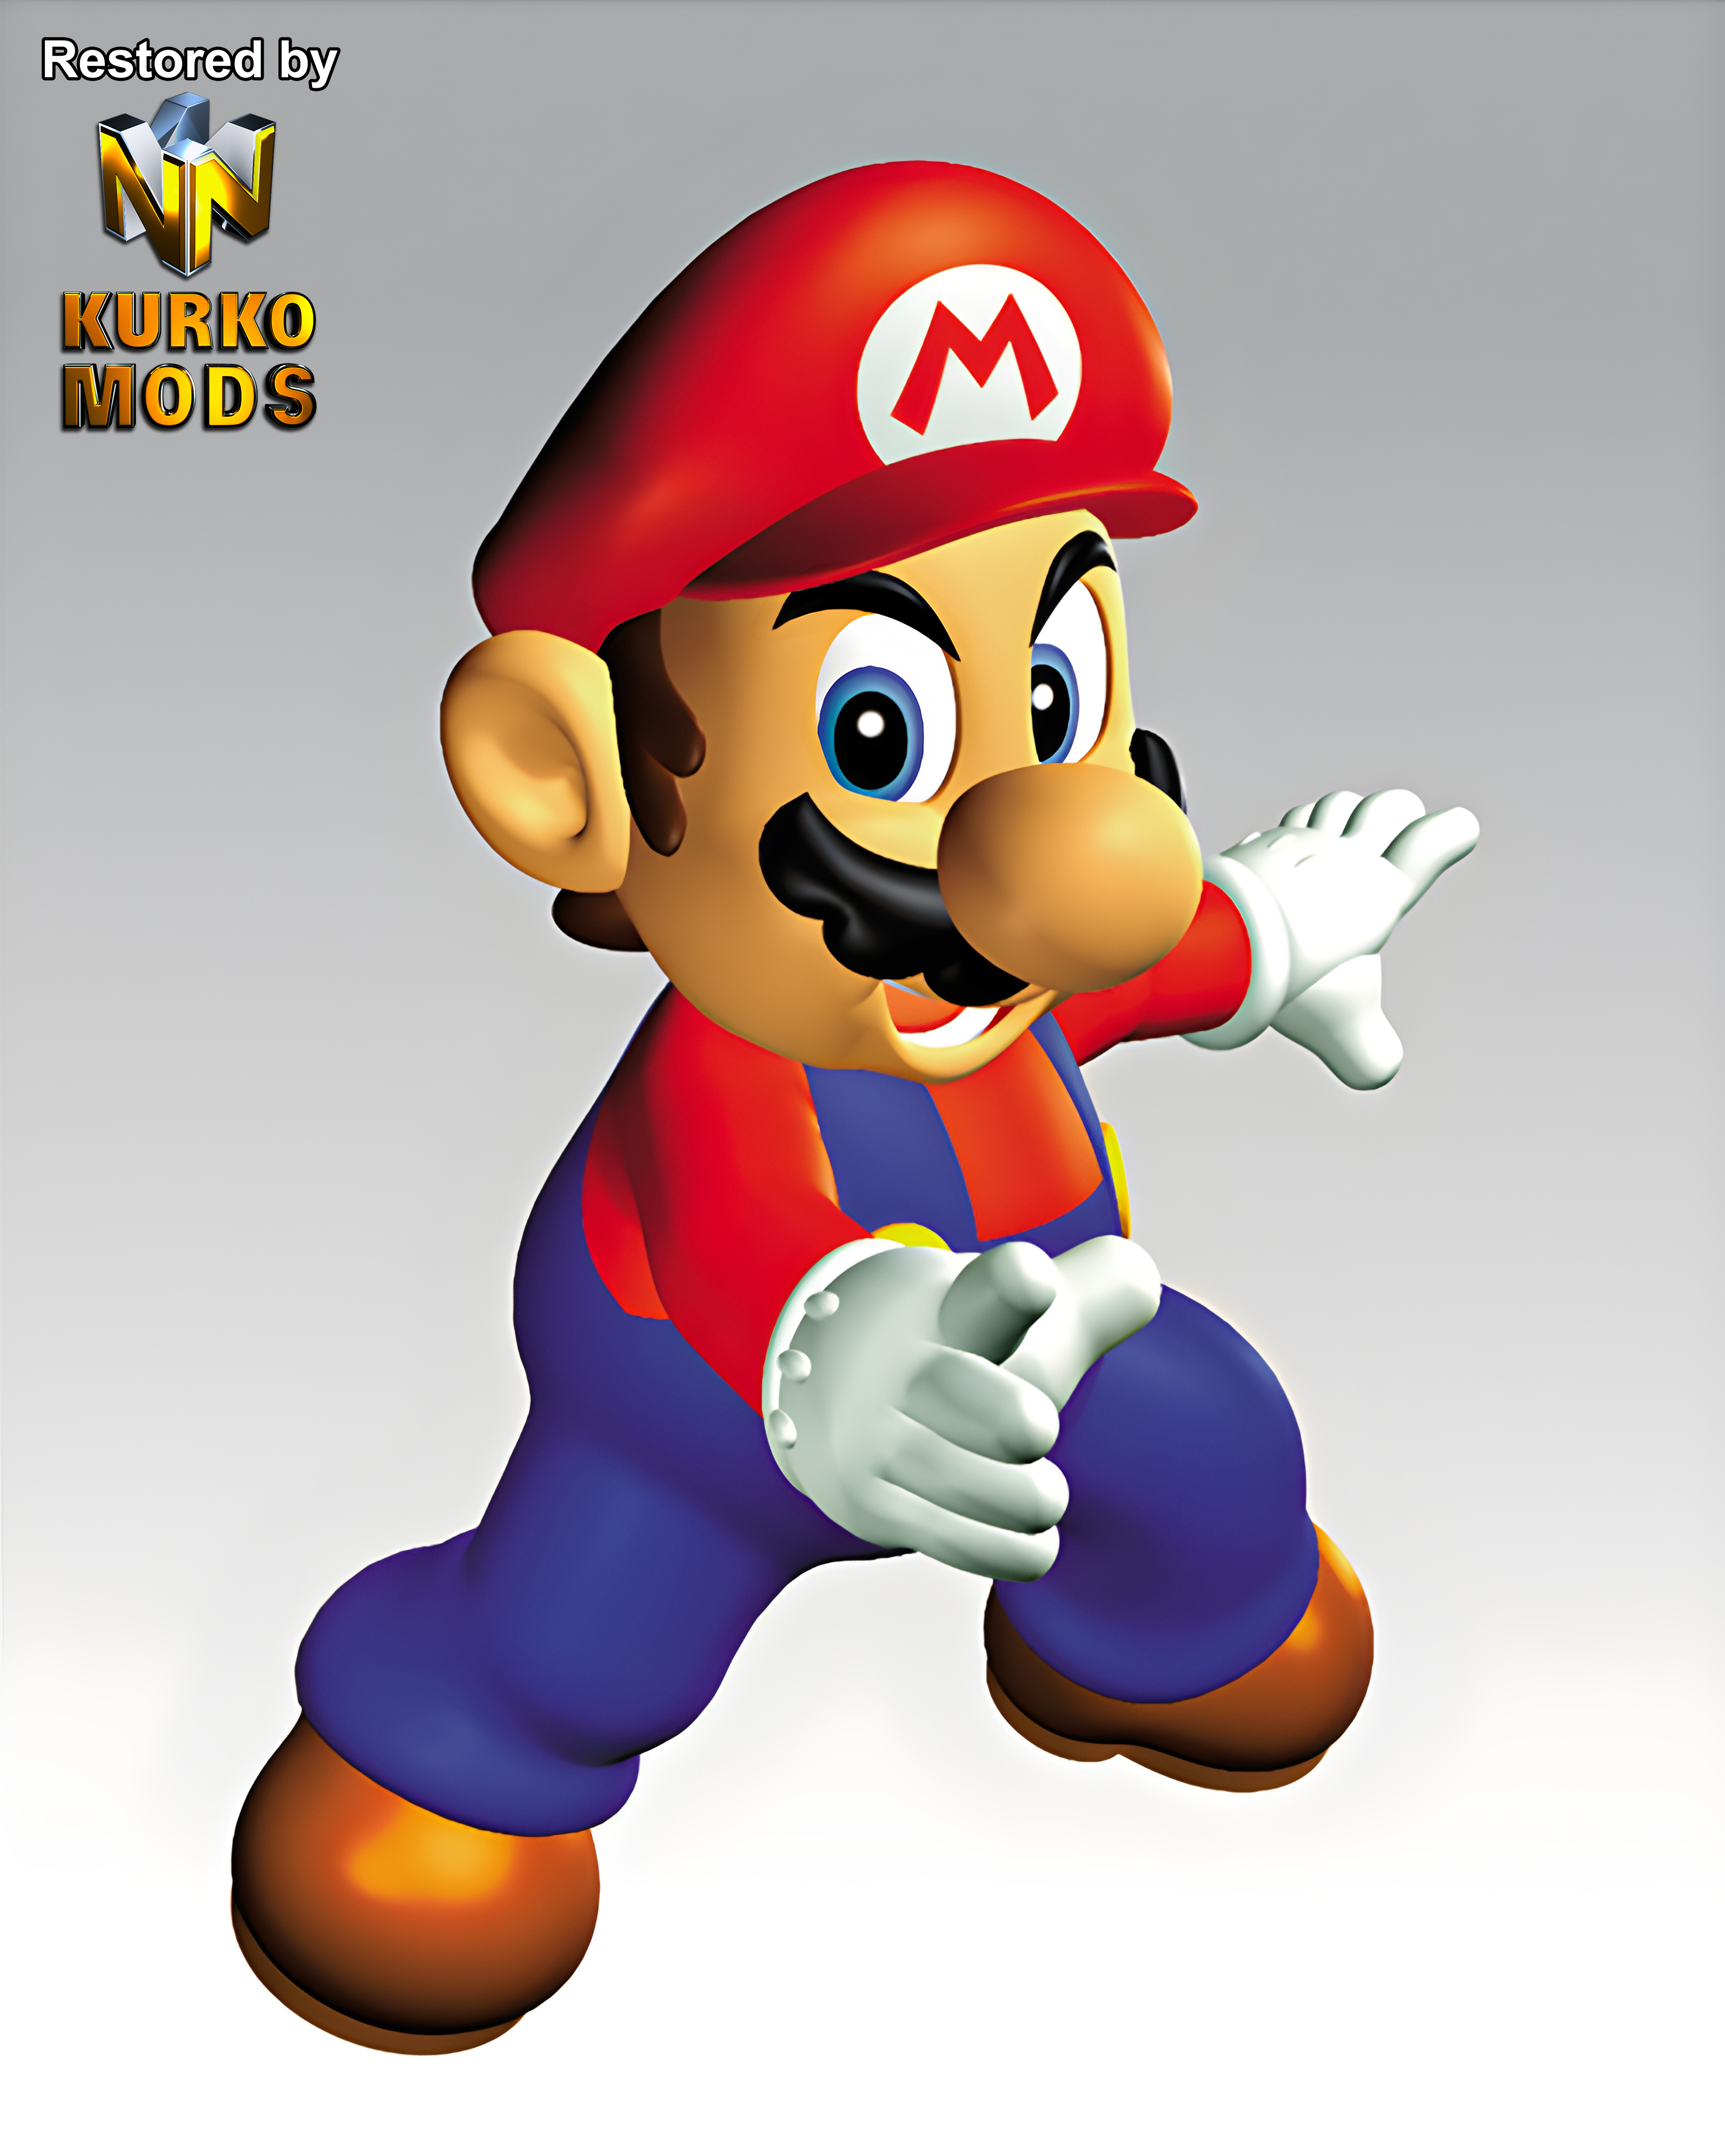 Super Mario 64 - Tails 64 Revamped - SAGE 2021 Demo - 4K 